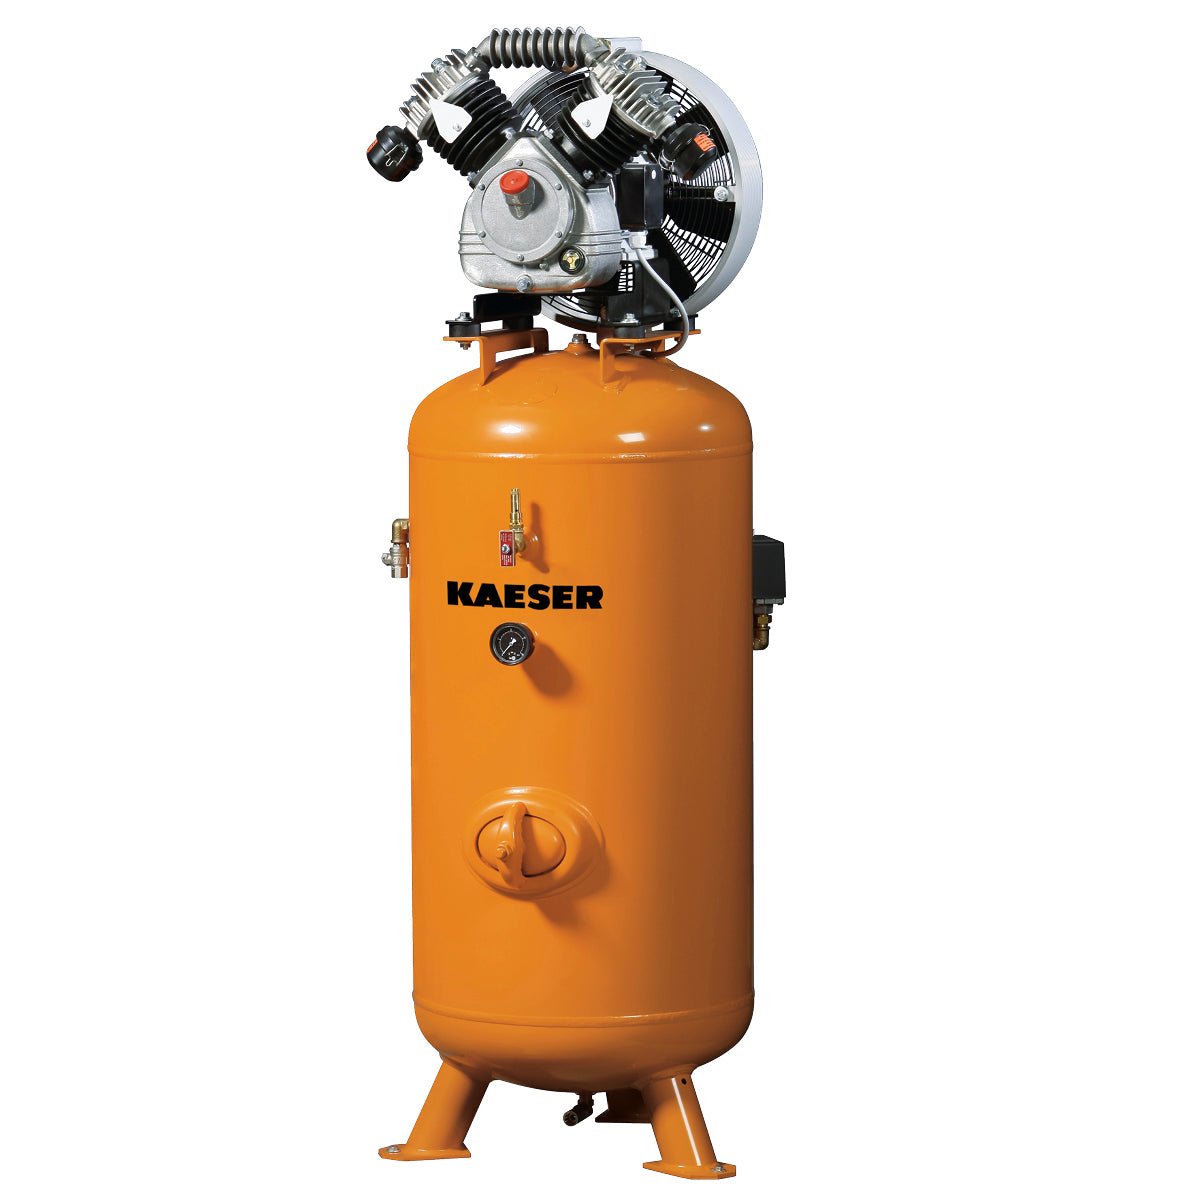 Kaeser piston compressor EPC 840-250 St 400/3/50